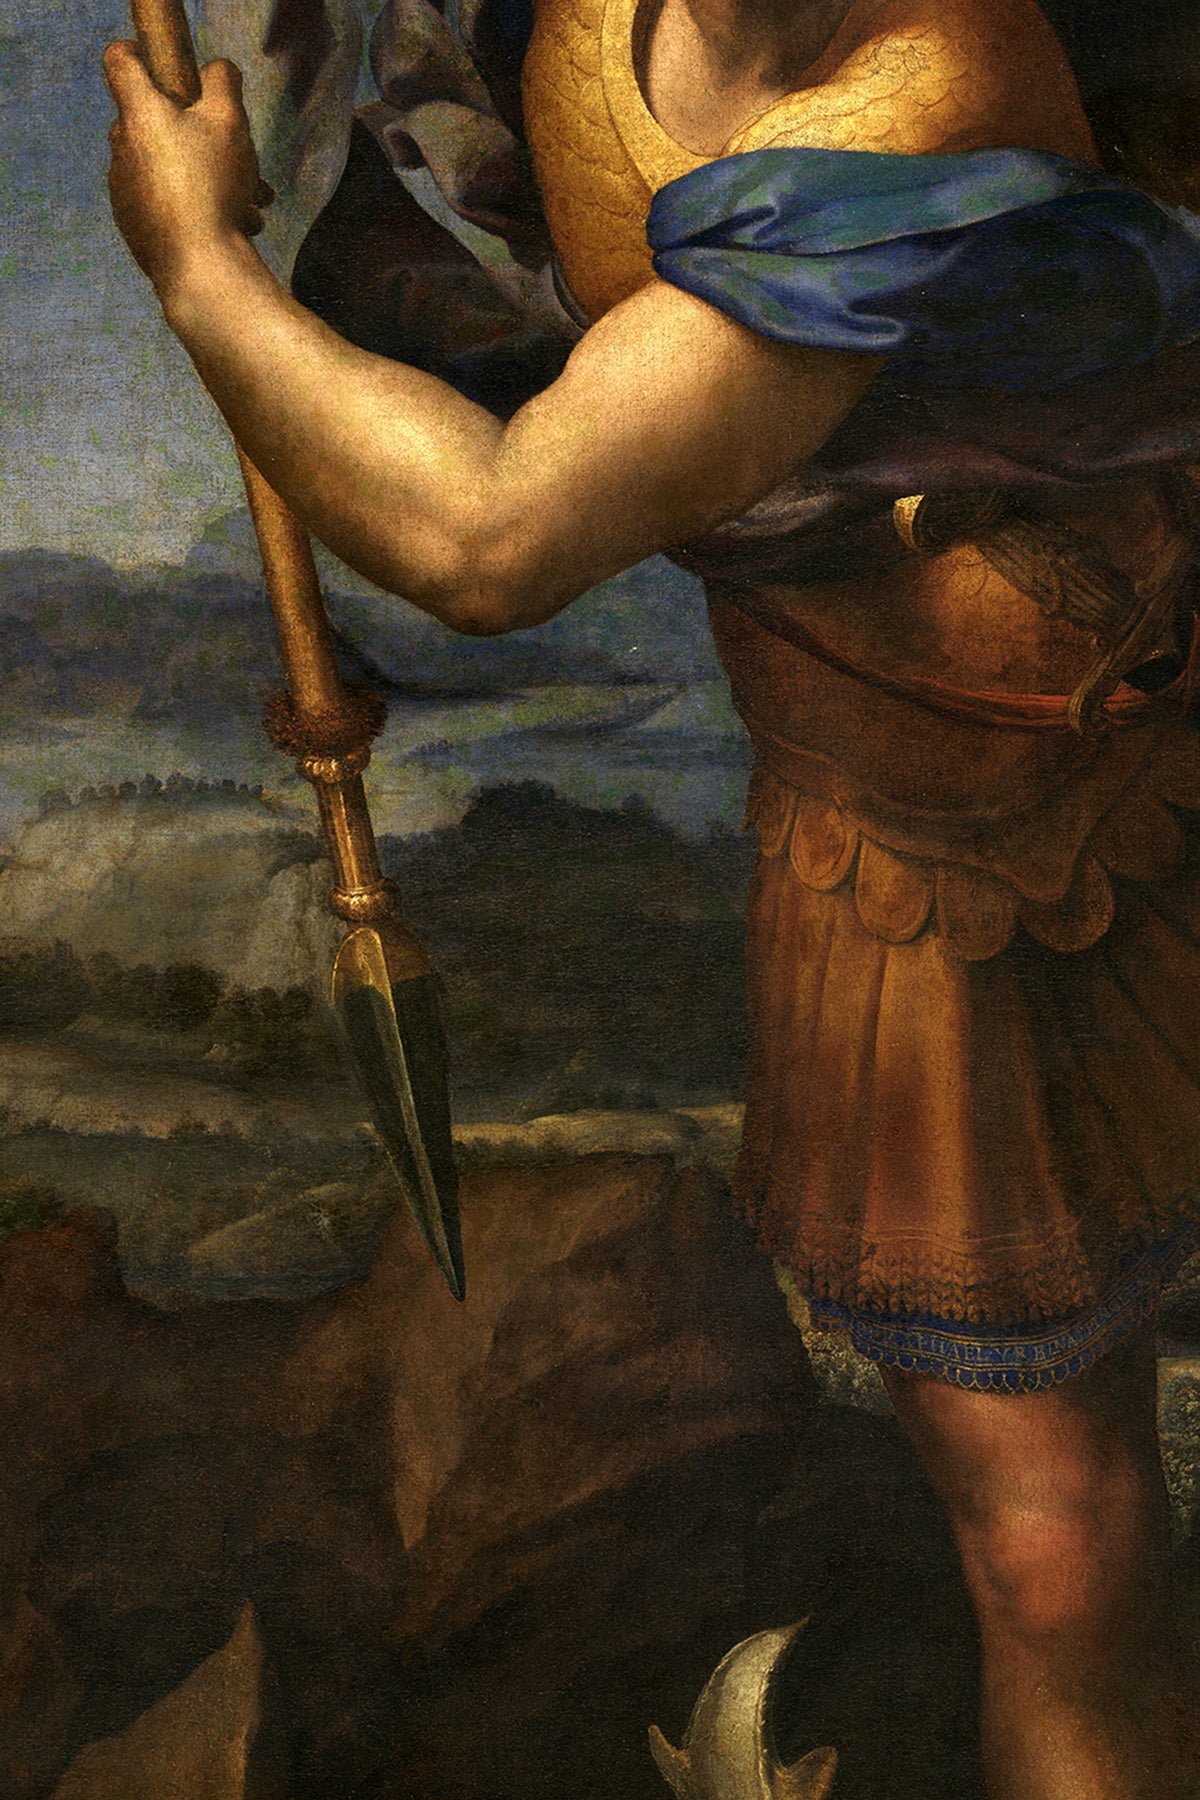 St. Michael Vanquishing Satan by Raphael